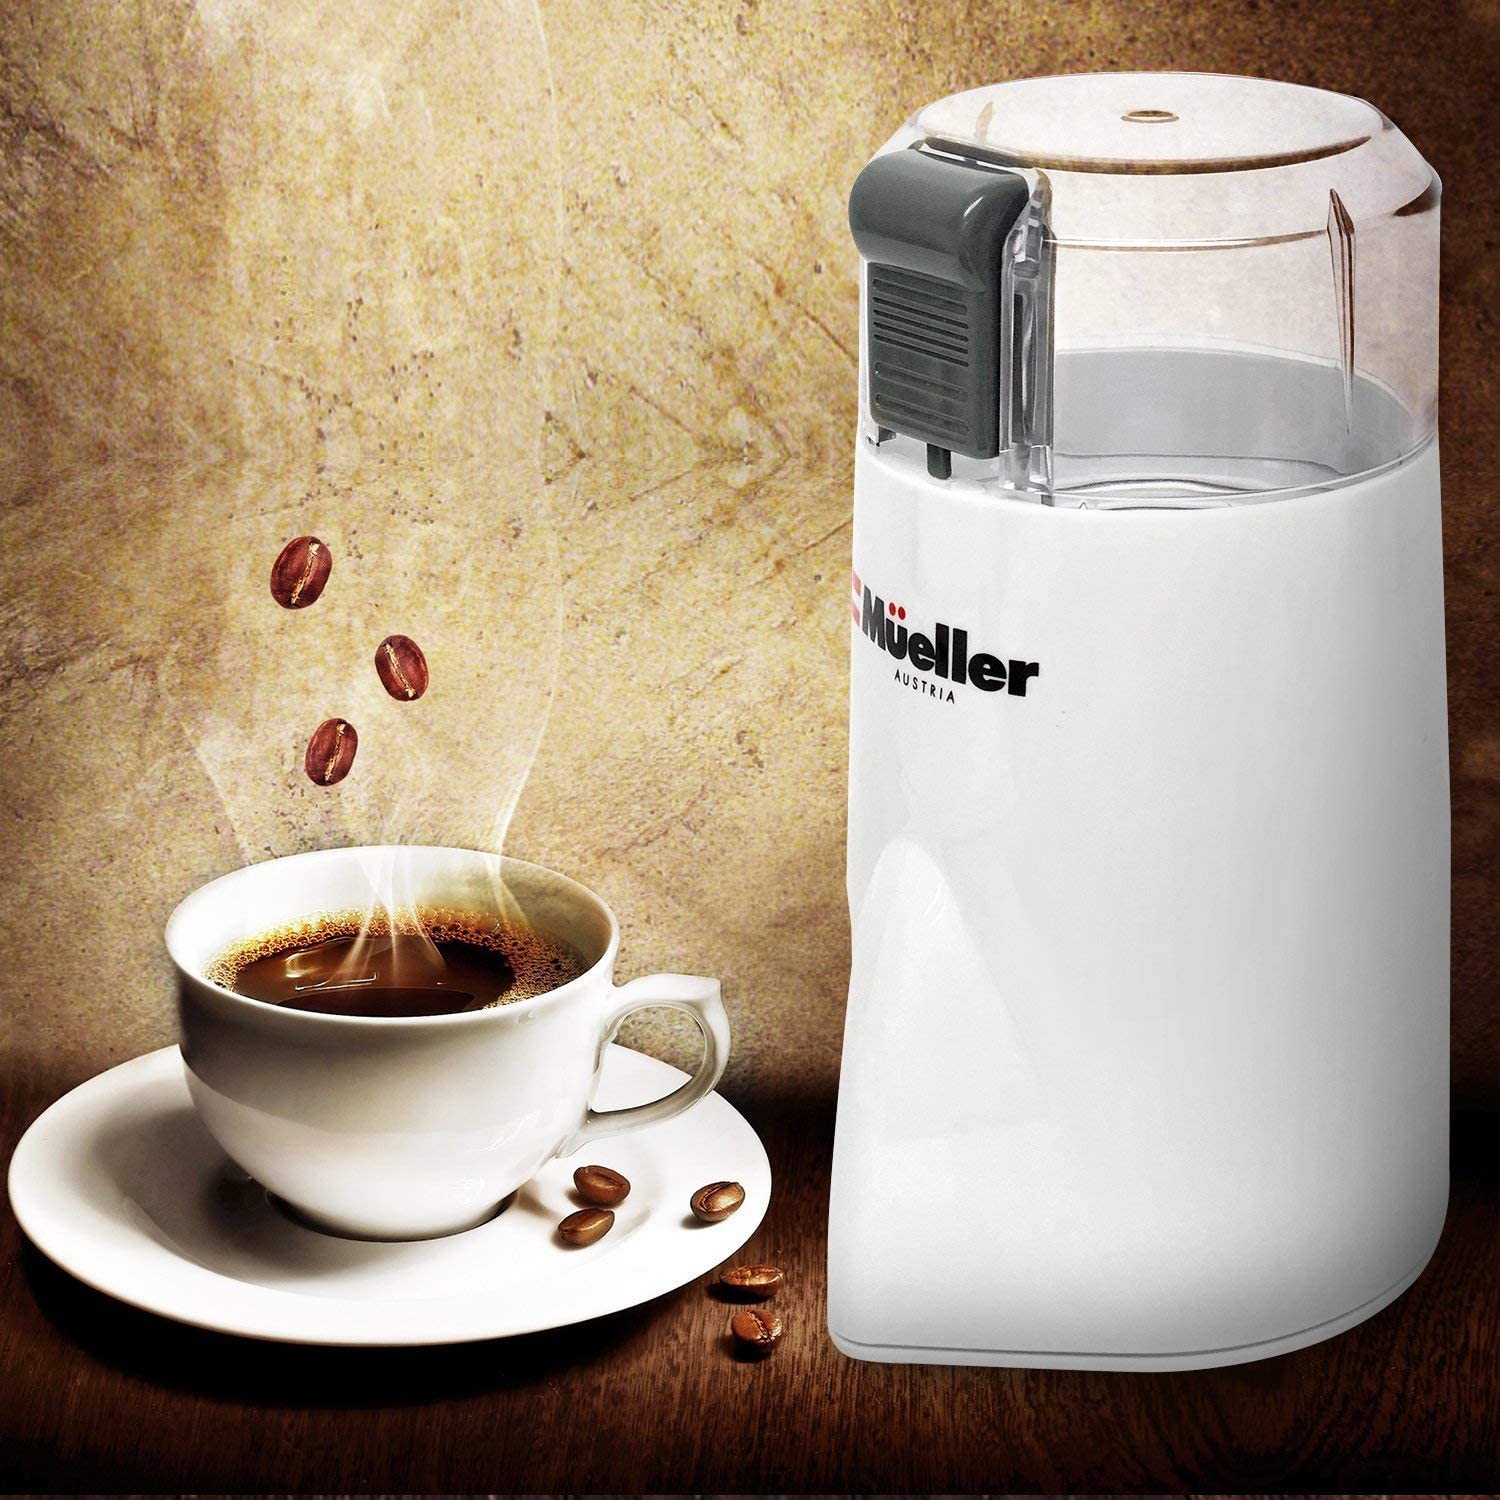 Mueller Austria HyperGrind Precision Electric Spice/Coffee Grinder